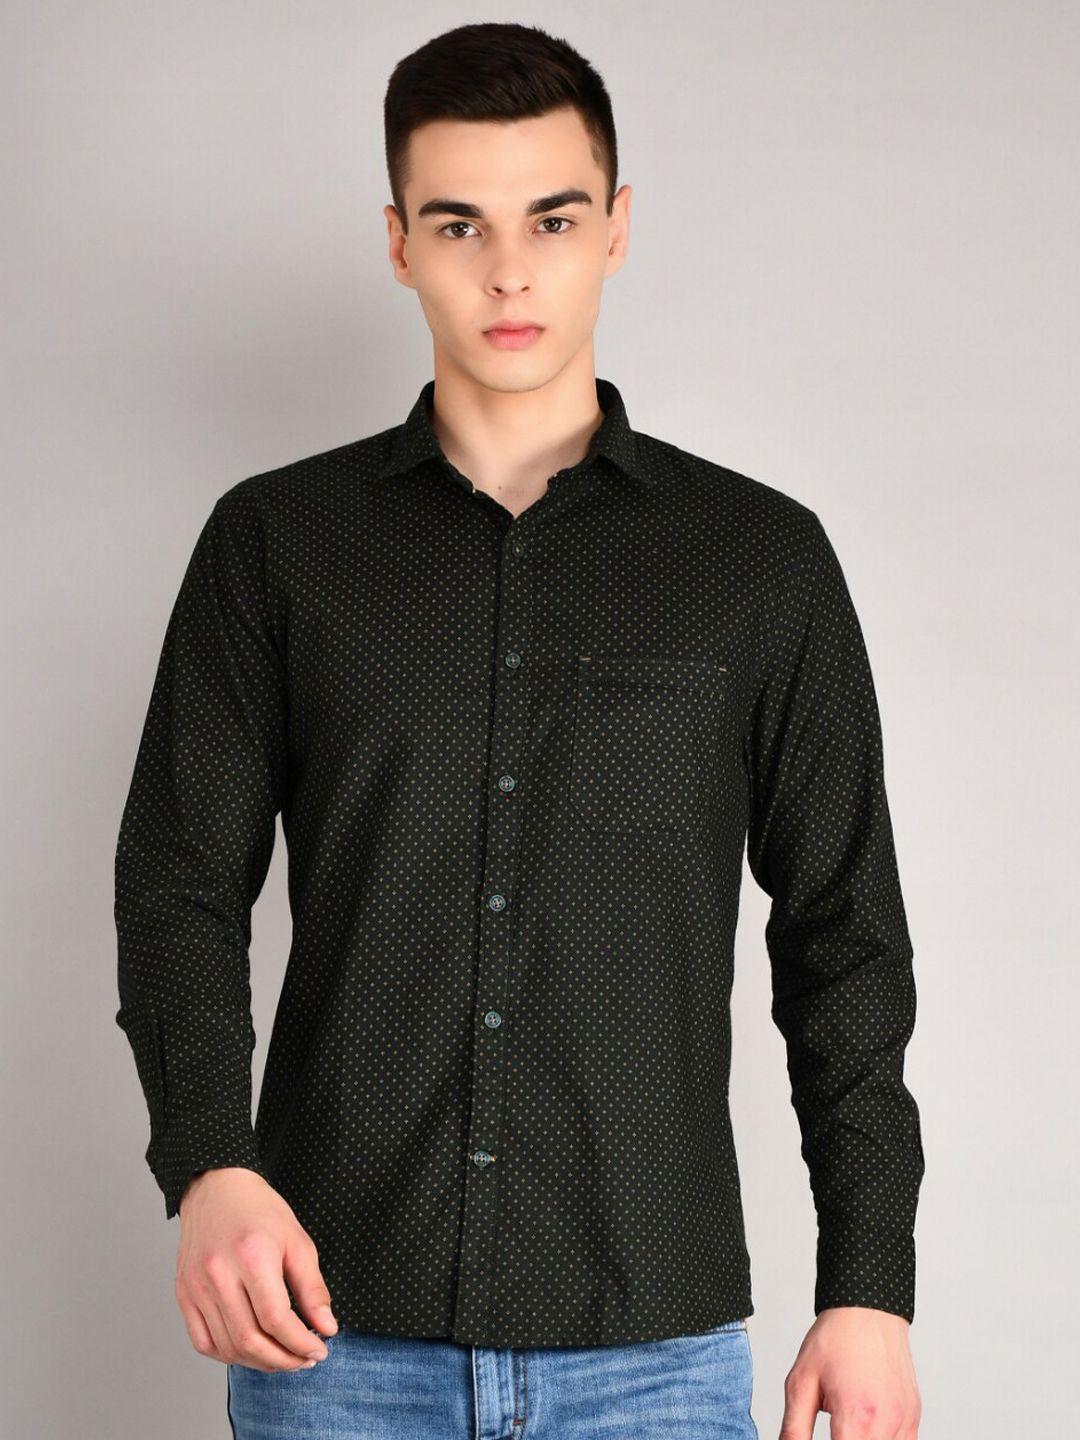 tim-paris-standard-opaque-micro-ditsy-printed-cotton-casual-shirt